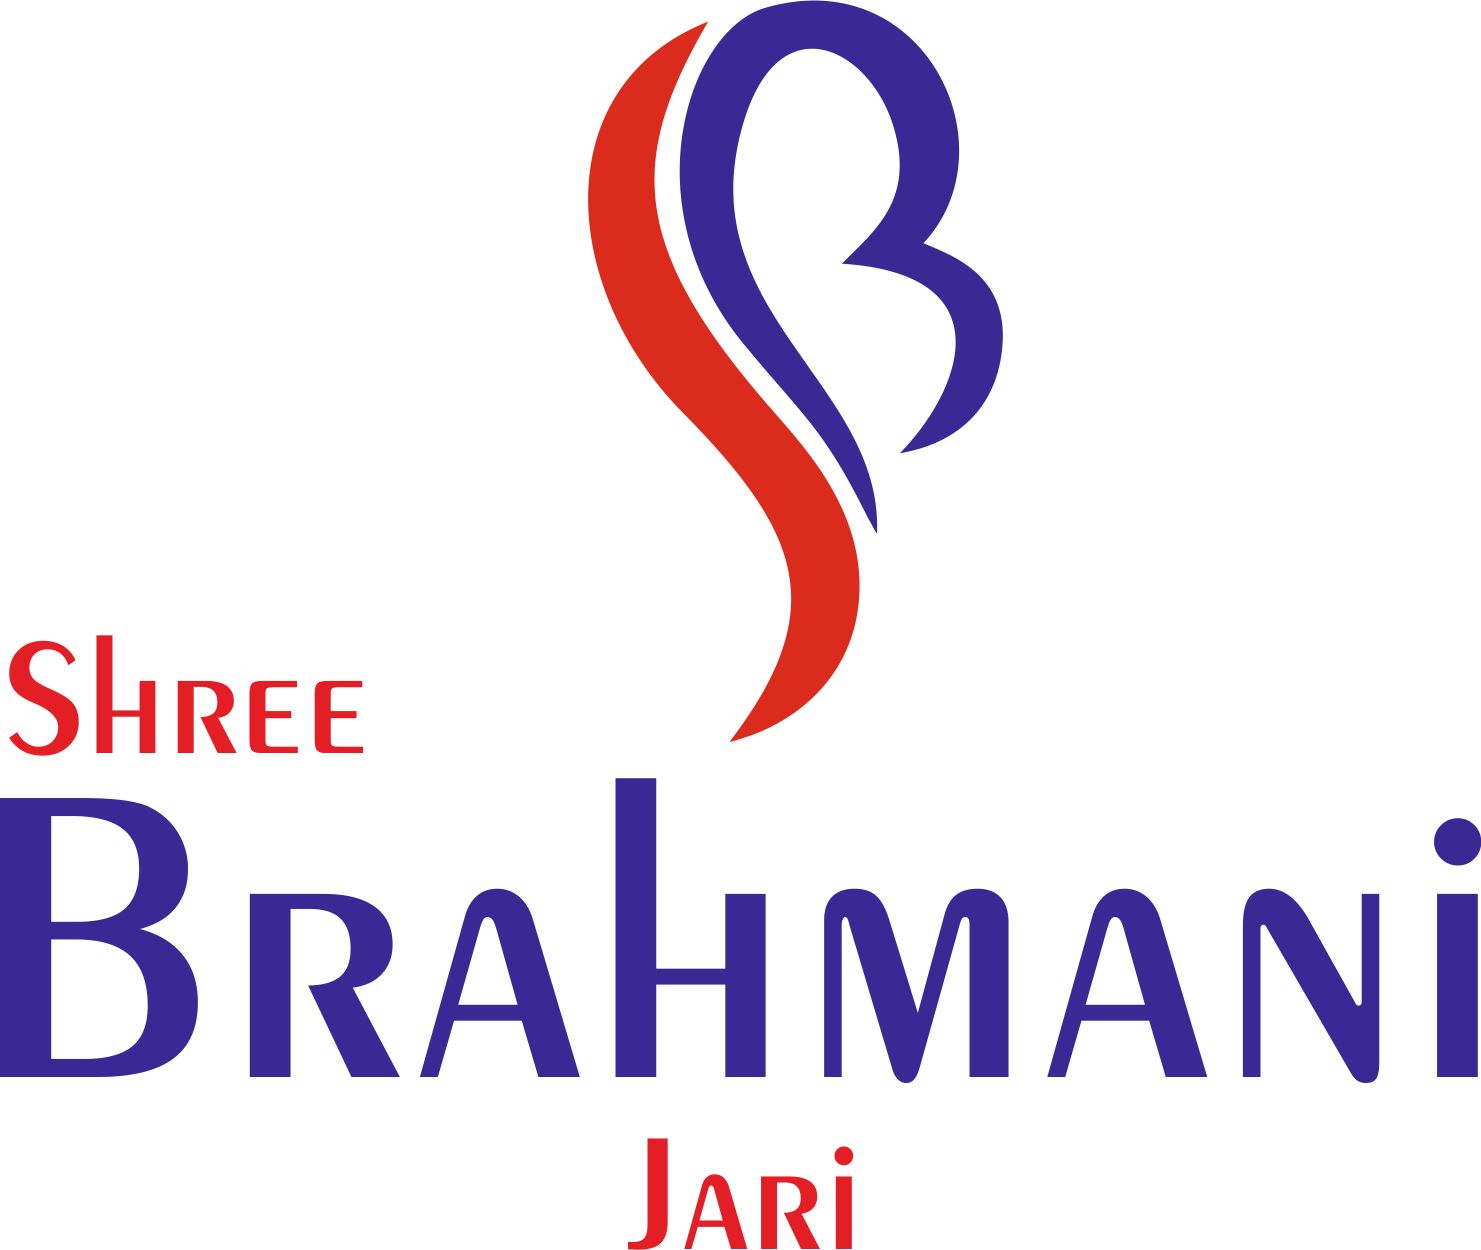 Shree Brahmani Jari